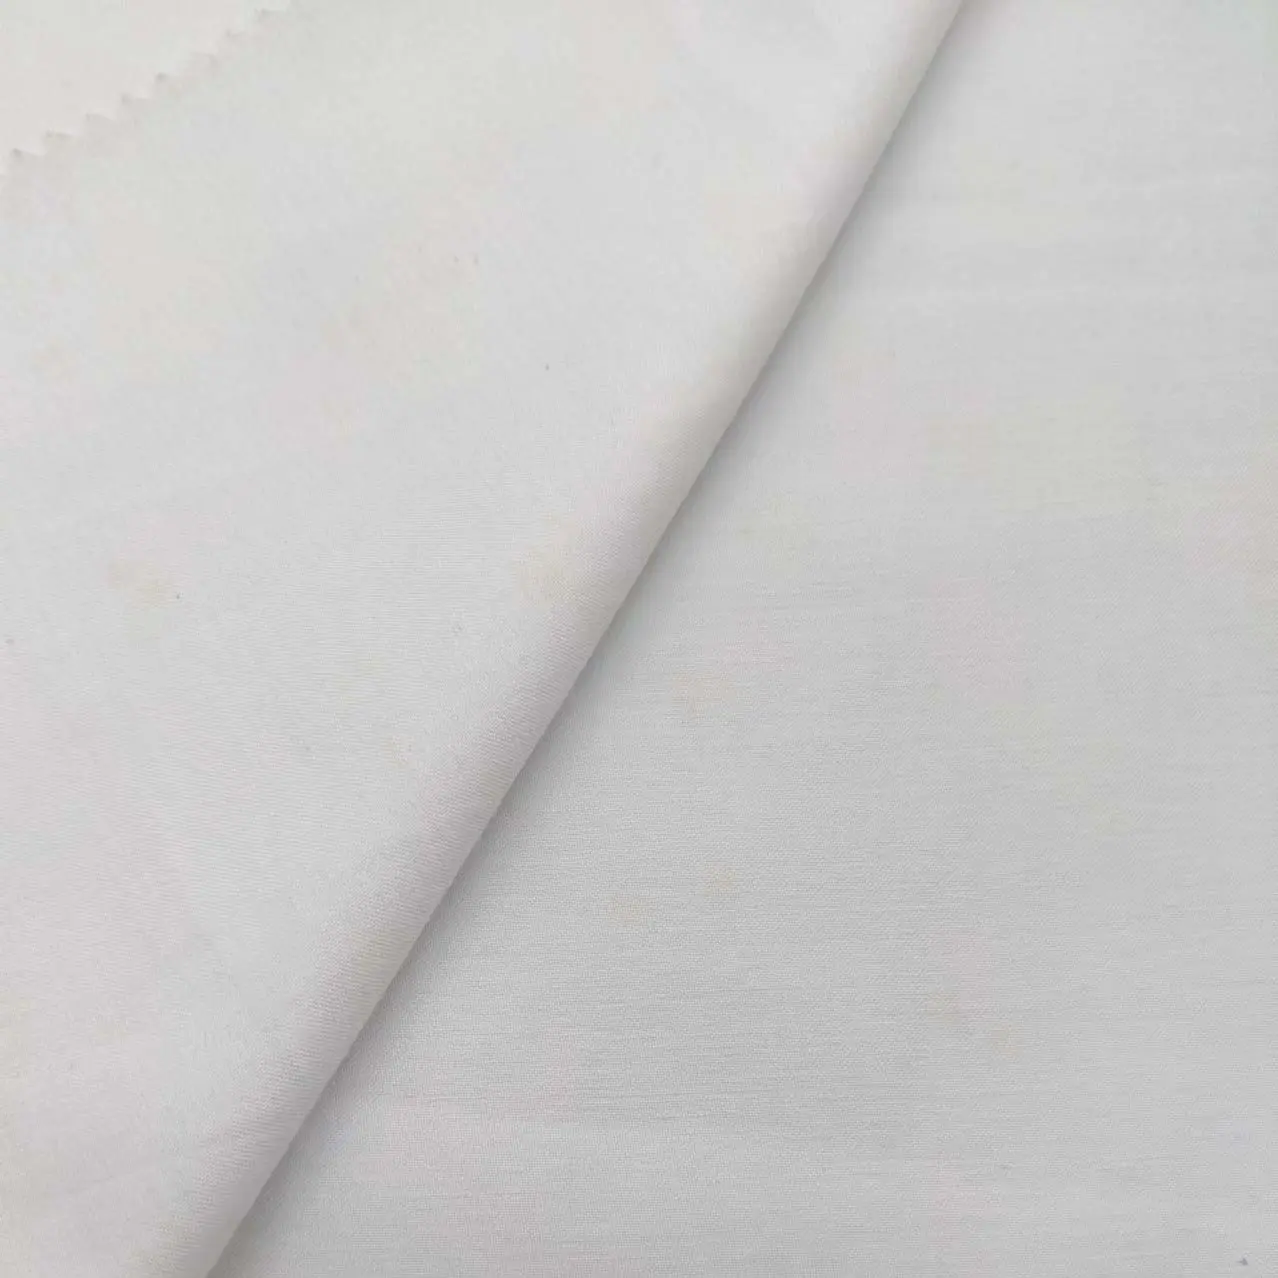 Wholesale 50dx50s poly cotton white color satin home textile bedding fabric